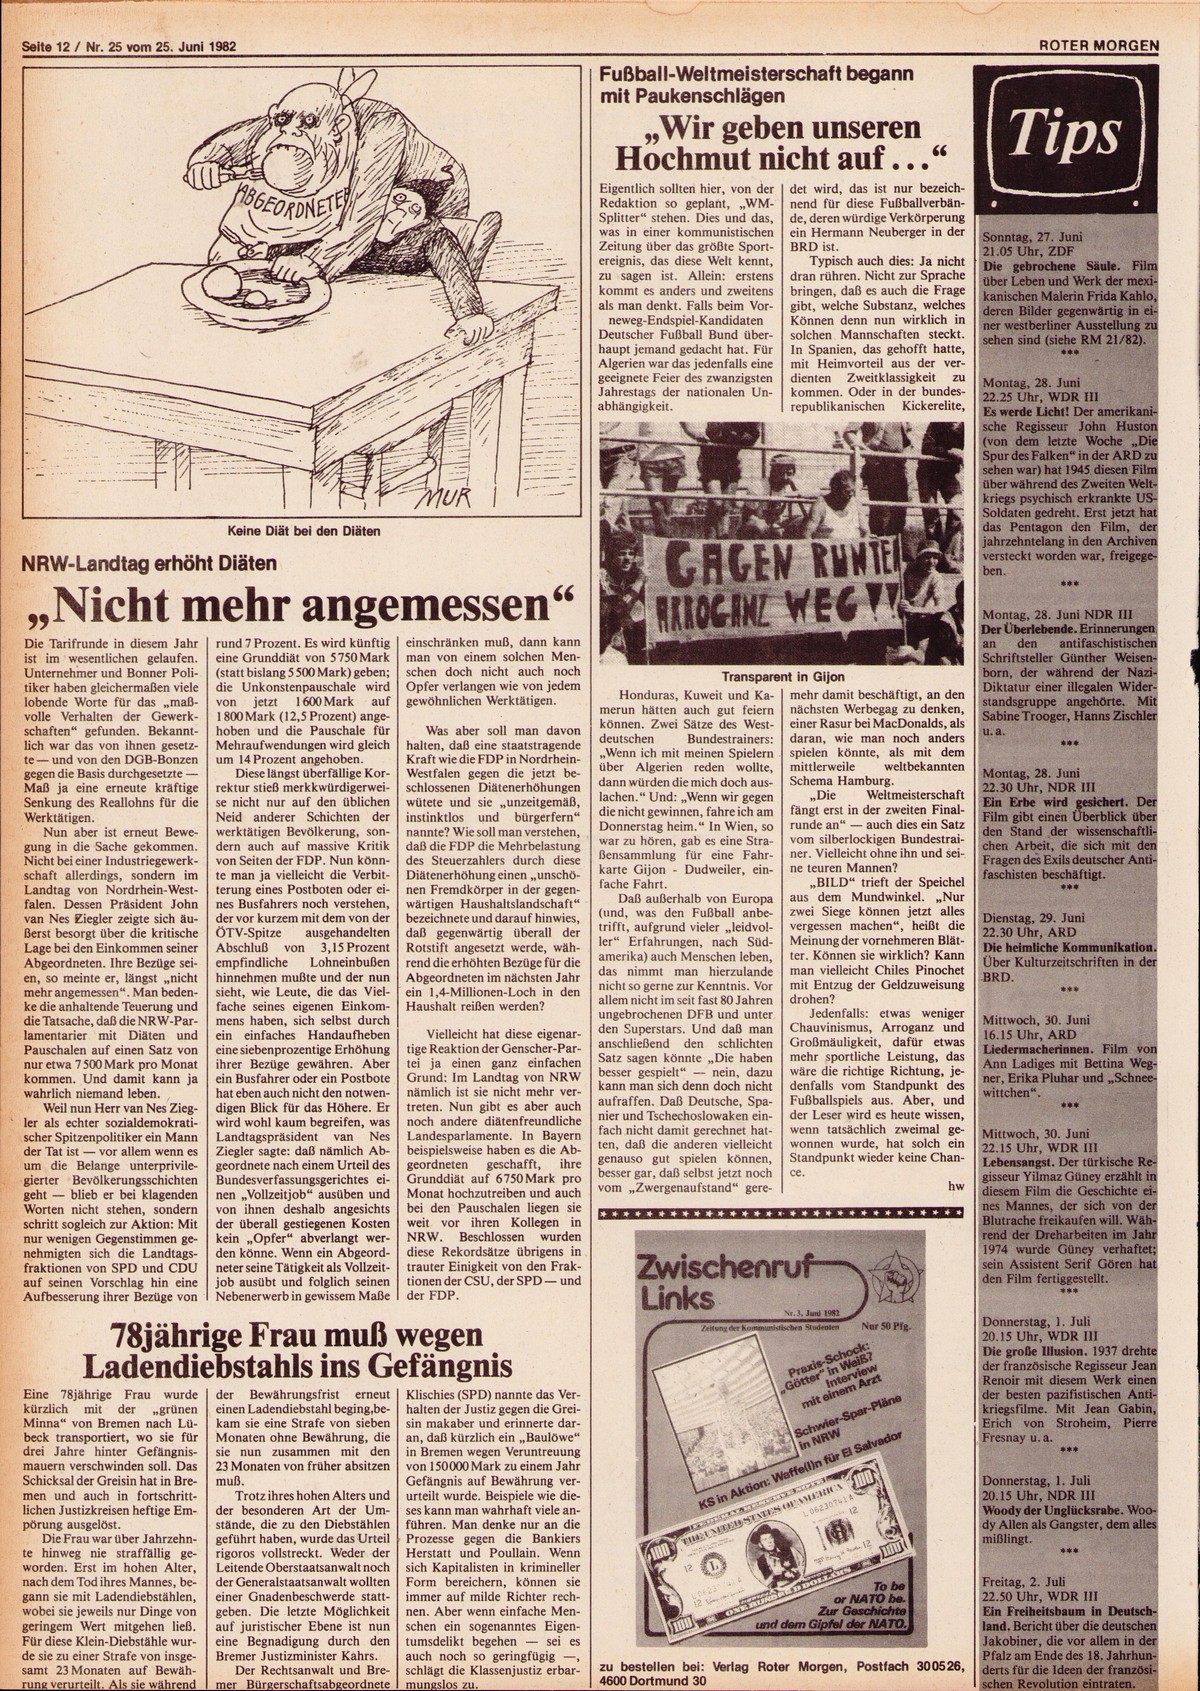 Roter Morgen, 16. Jg., 25. Juni 1982, Nr. 25, Seite 12